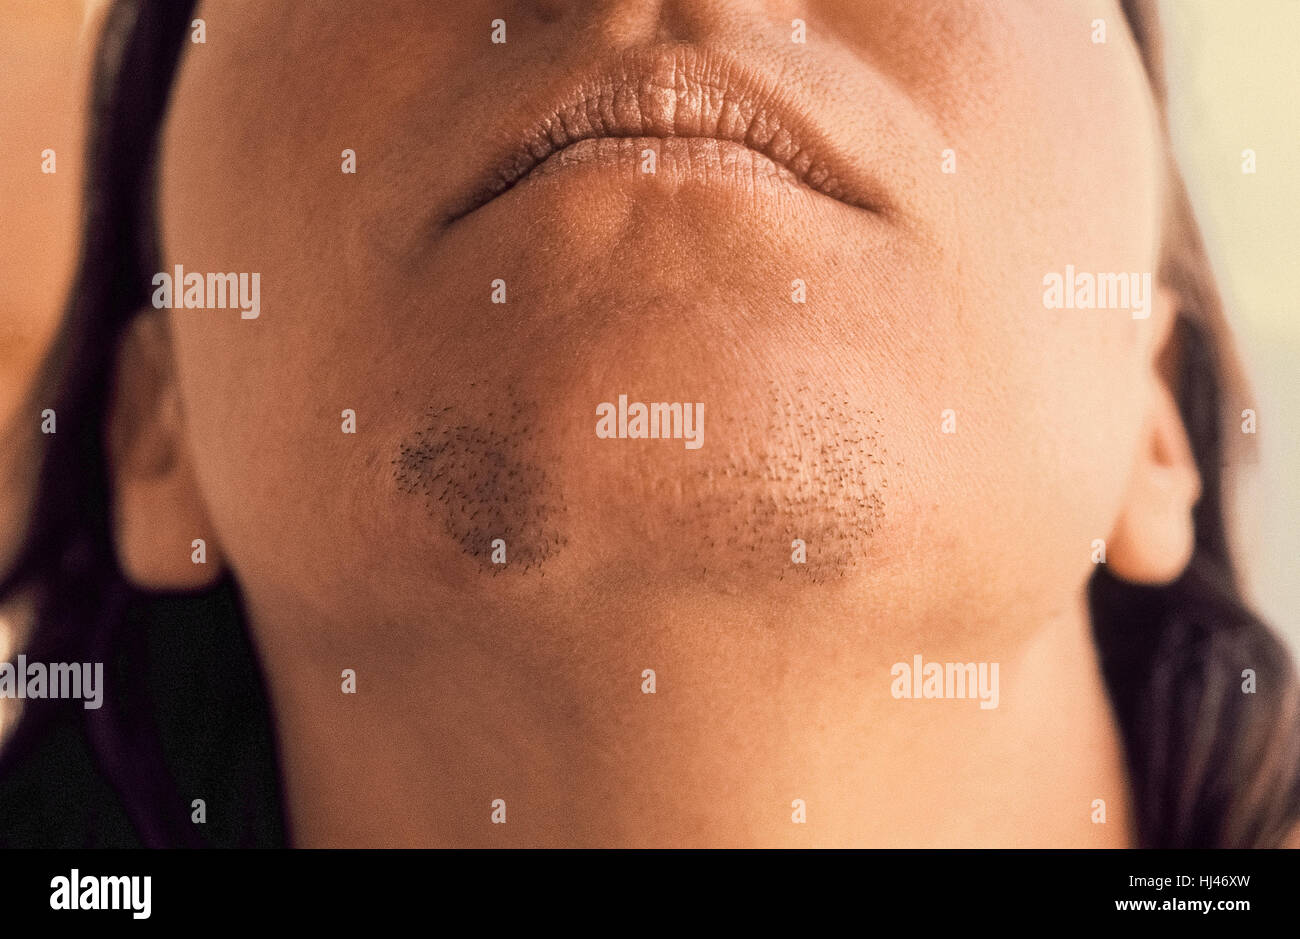 Whiskers beard -Fotos und -Bildmaterial in hoher Auflösung – Alamy